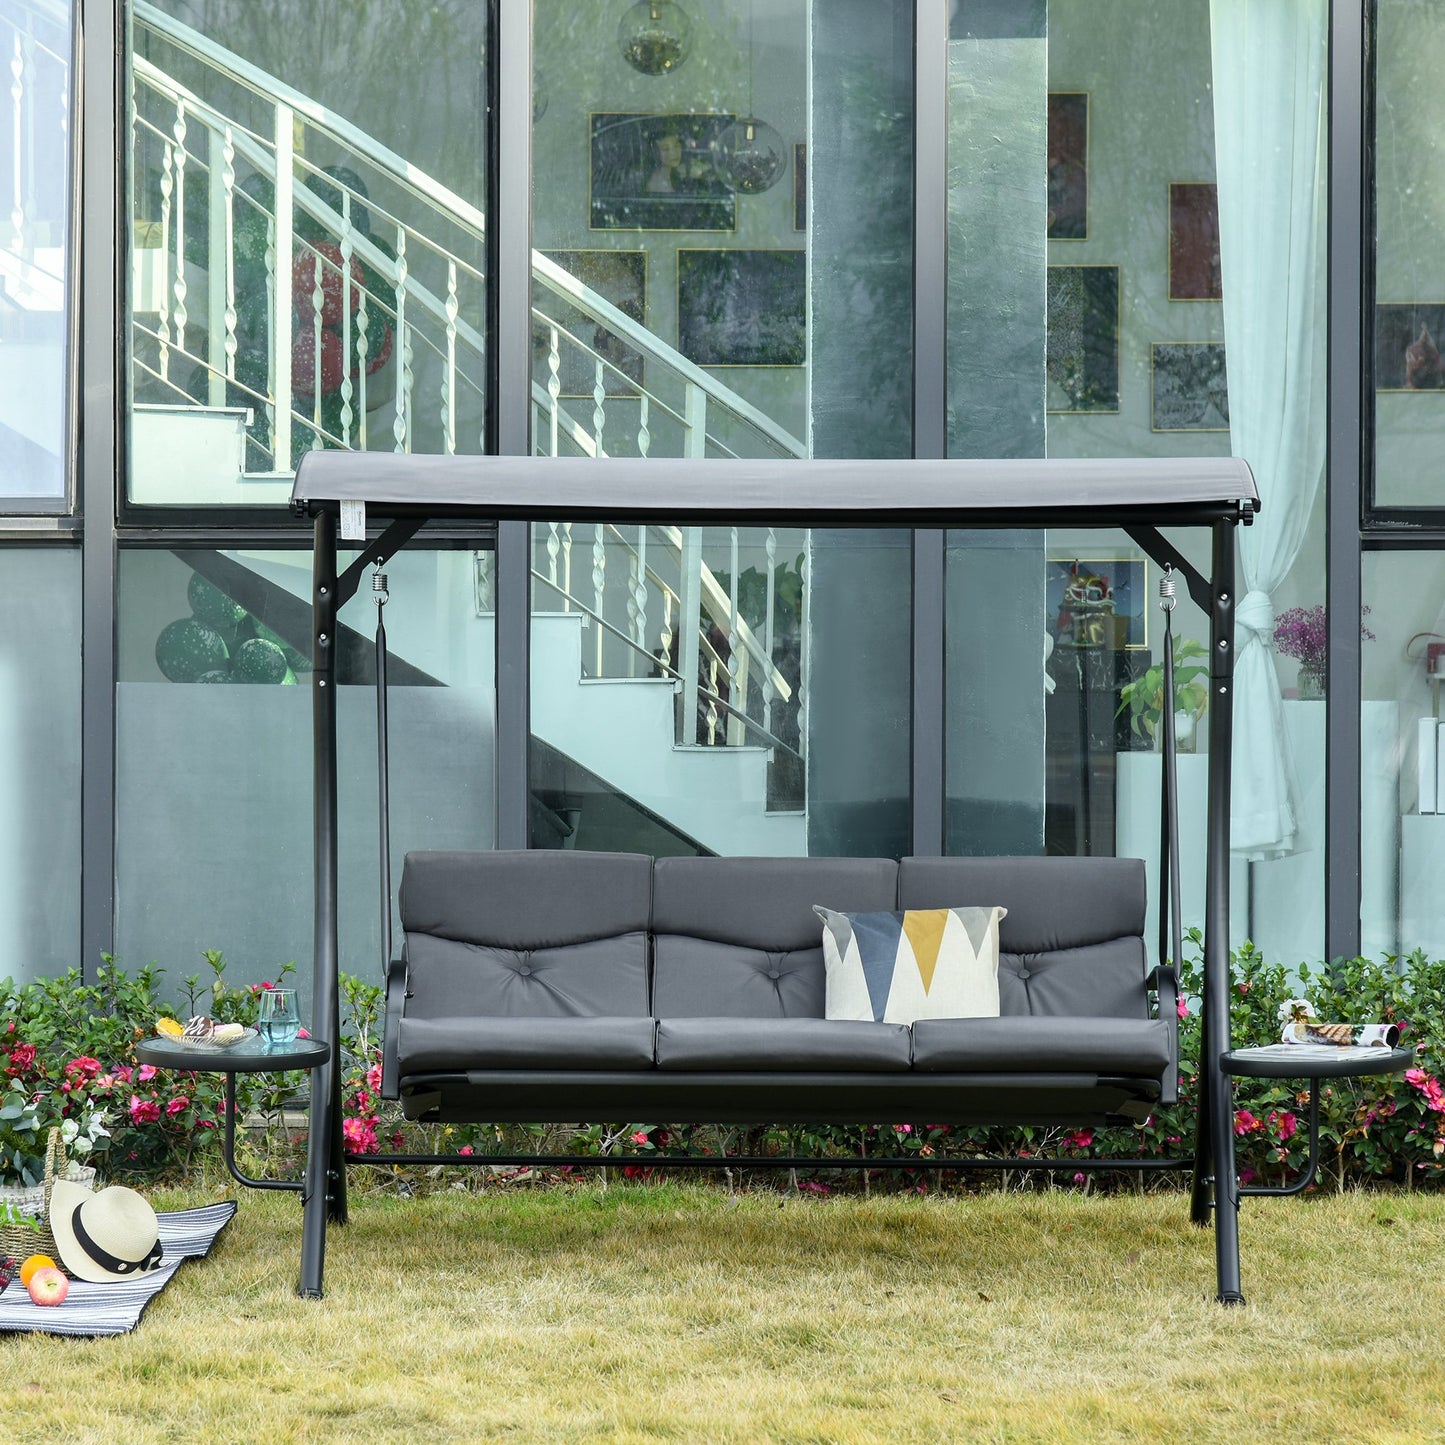 Nancy's Price Garden Swing - Steel/Polyester - 3-seater Swing Bench - Modern - Gray/Black - 278 x 125 x 177 cm